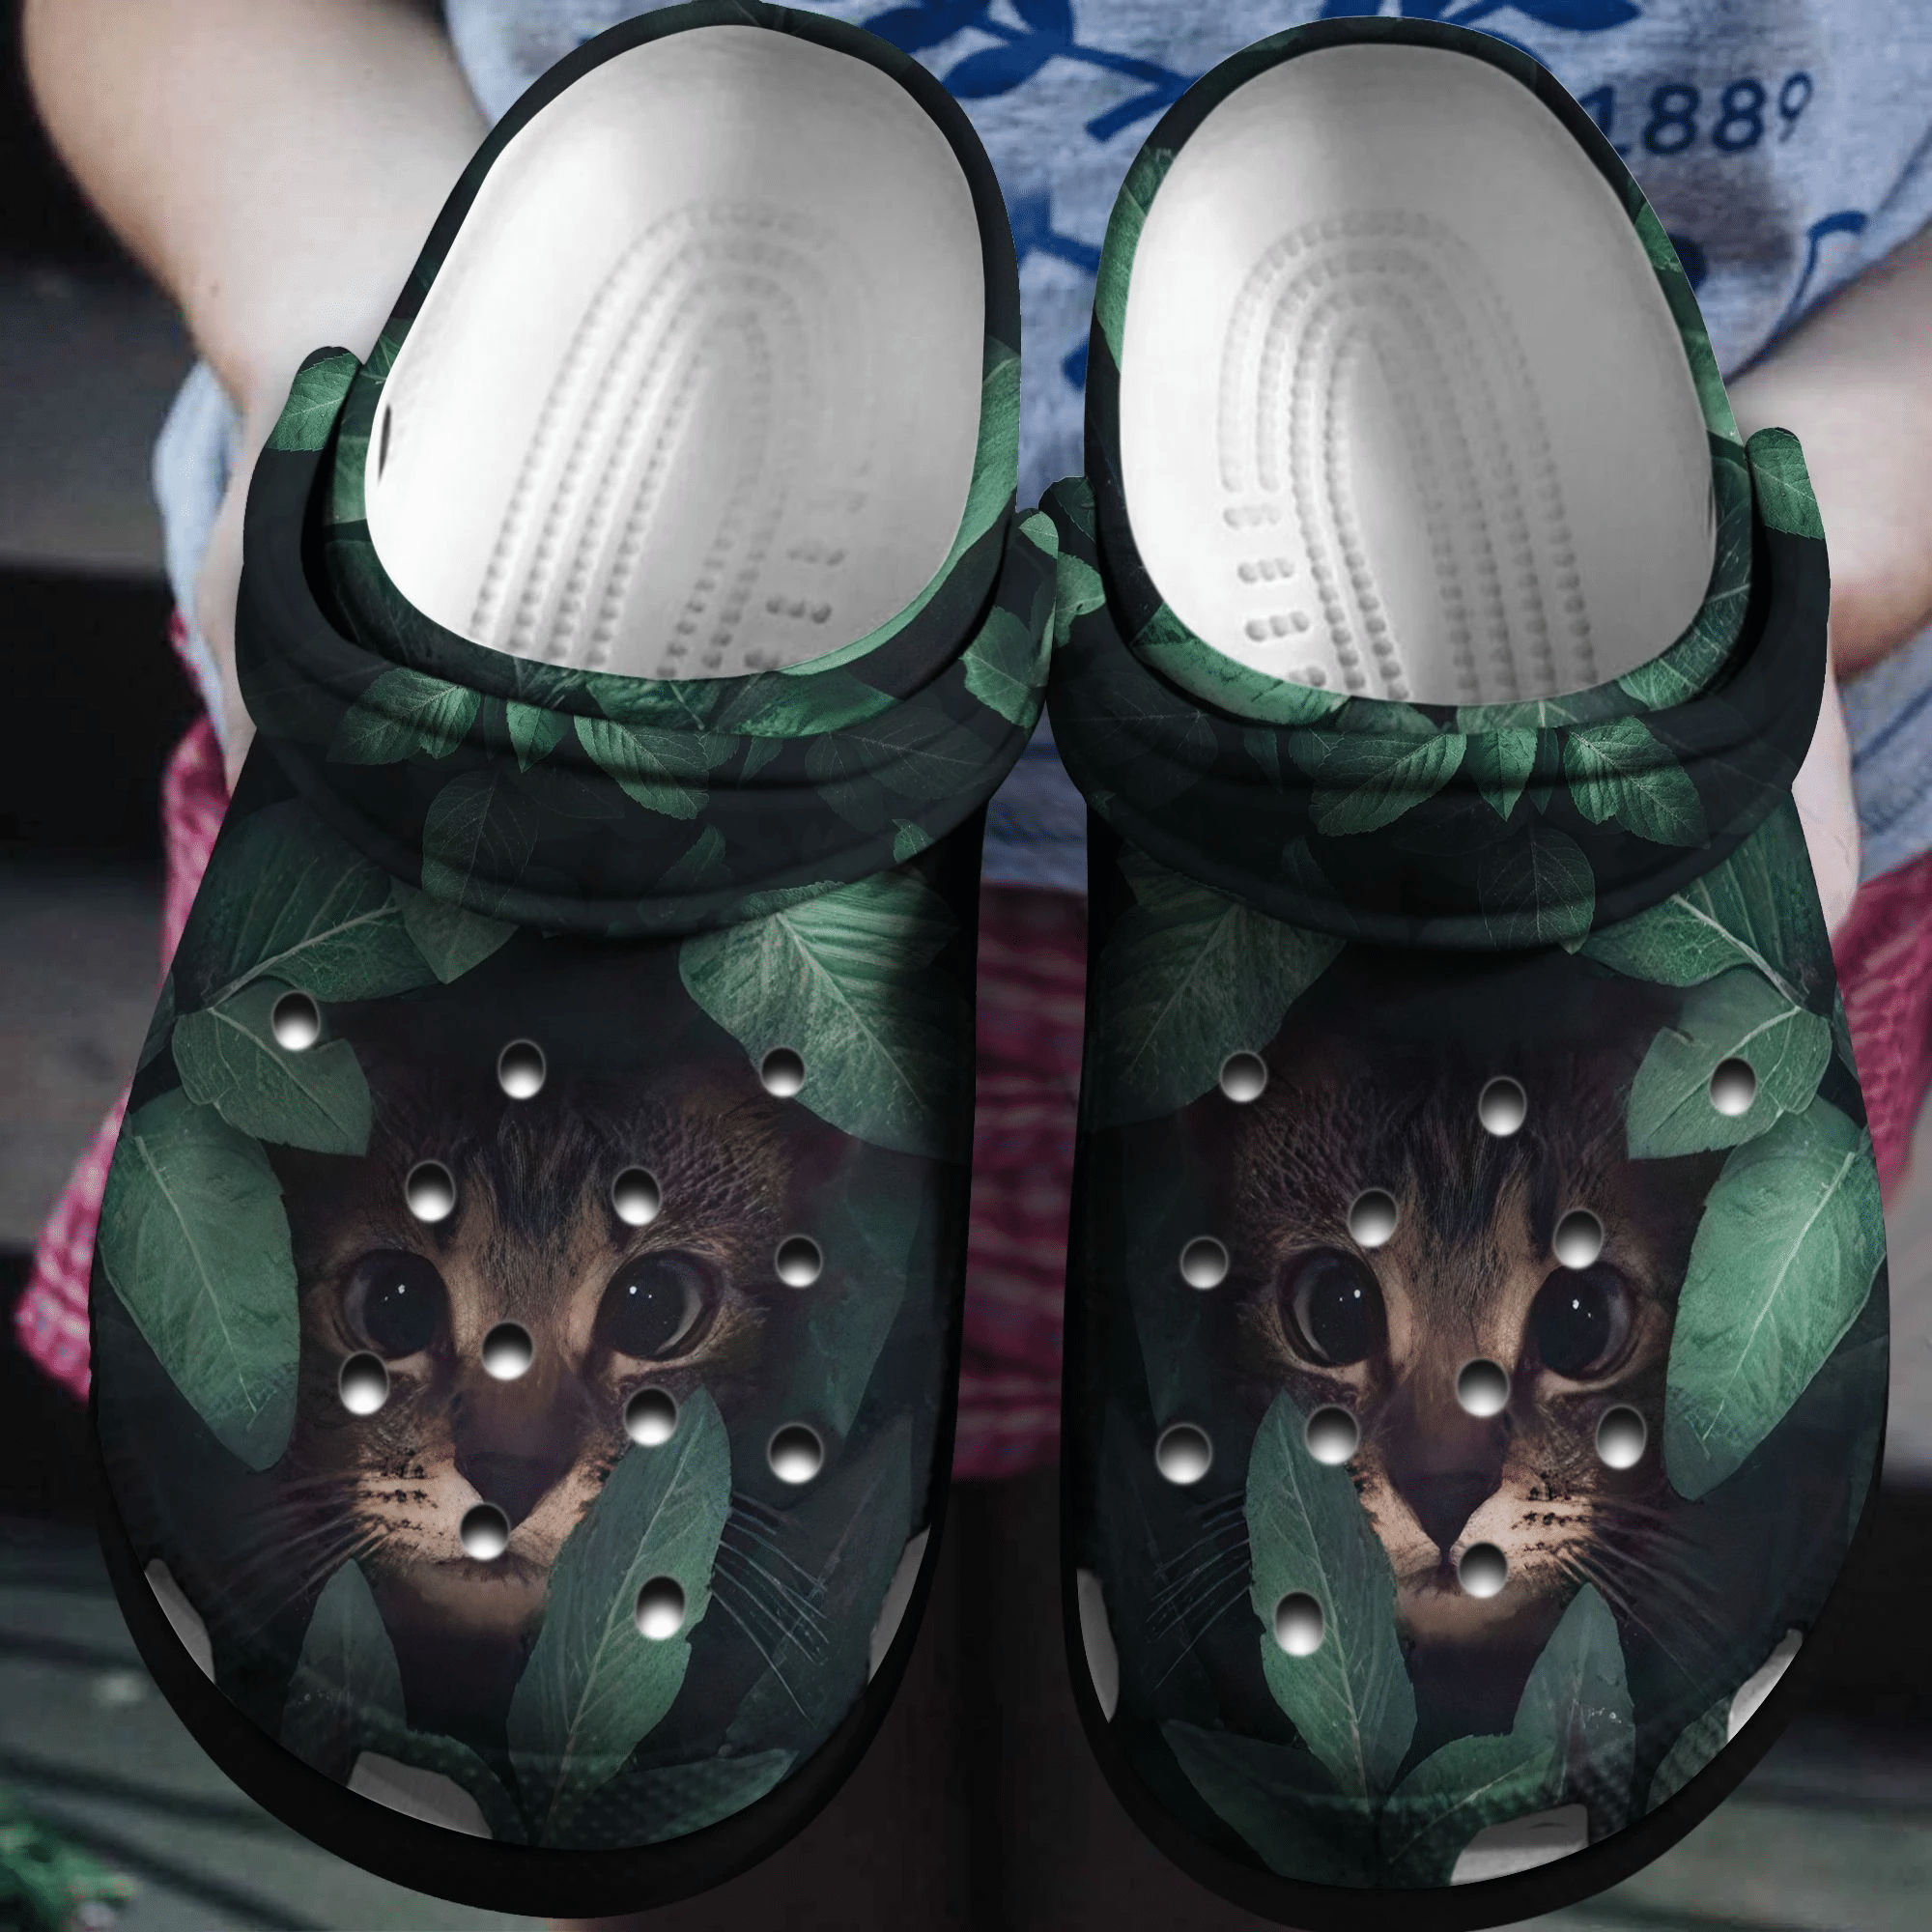 Cat And The Grove Crocs Shoes - Funny Animal Crocs Crocbland Clog Gift For Man Woman Boy Girl